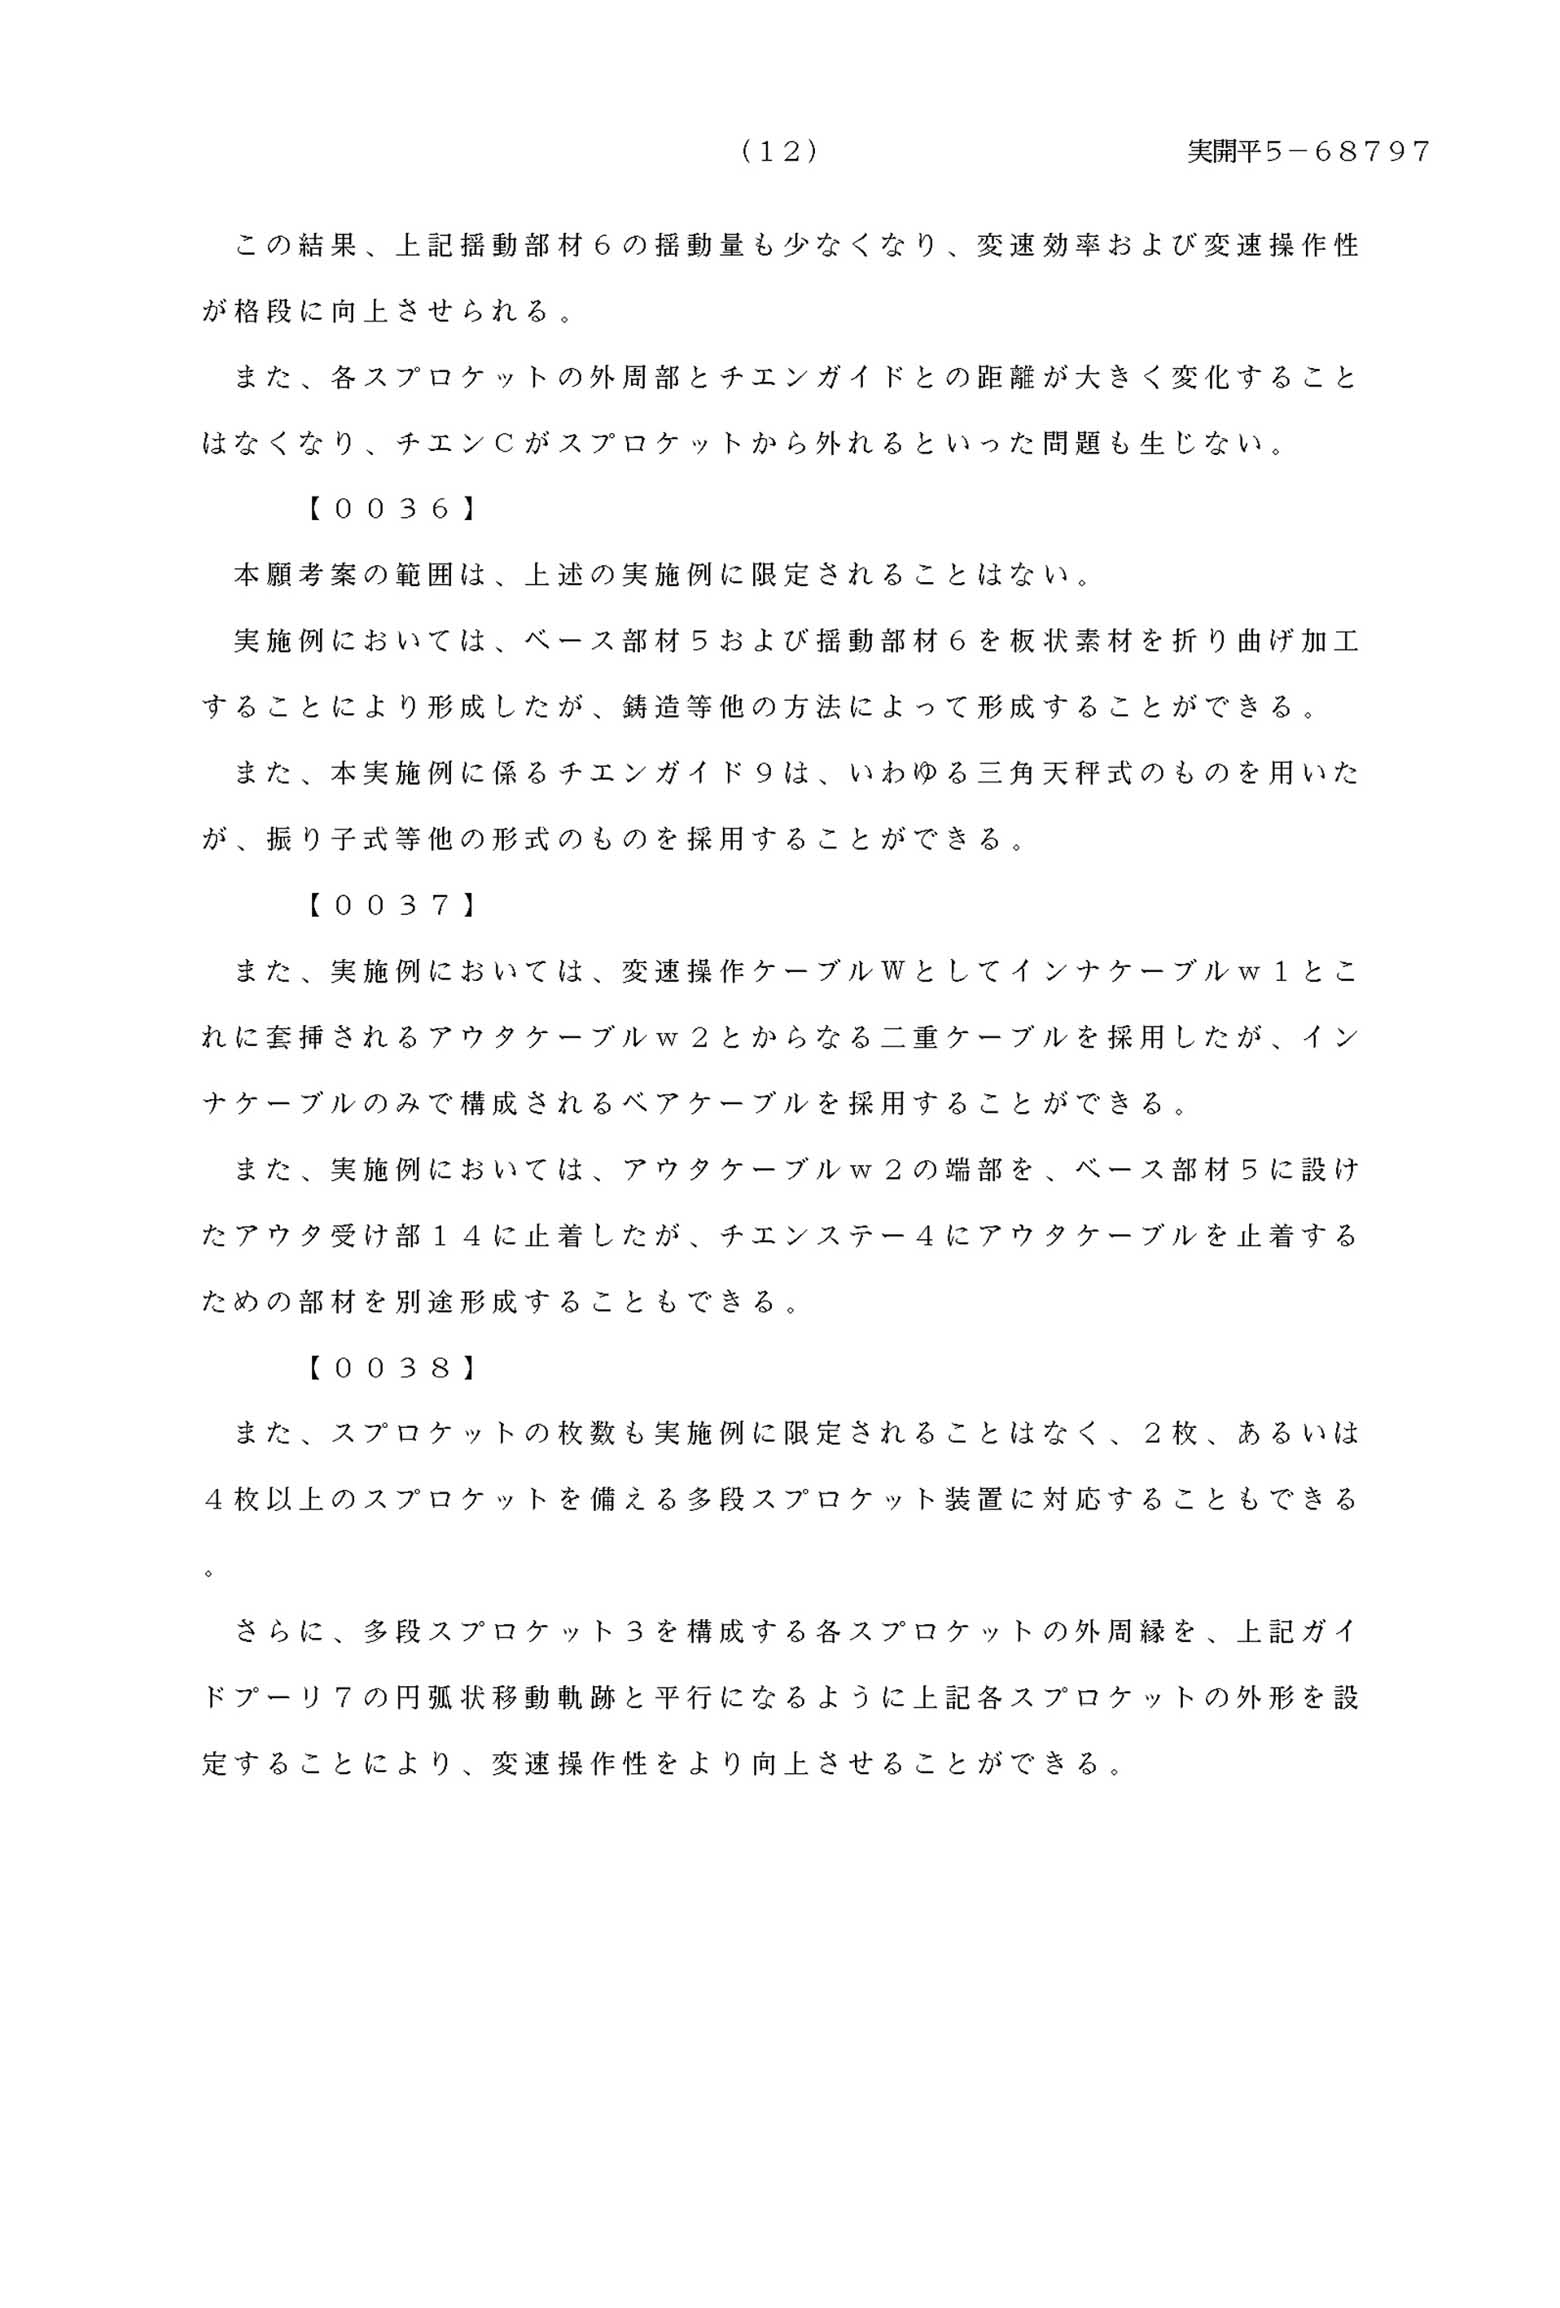 Japanese Patent H5-68797 scan 12 main image